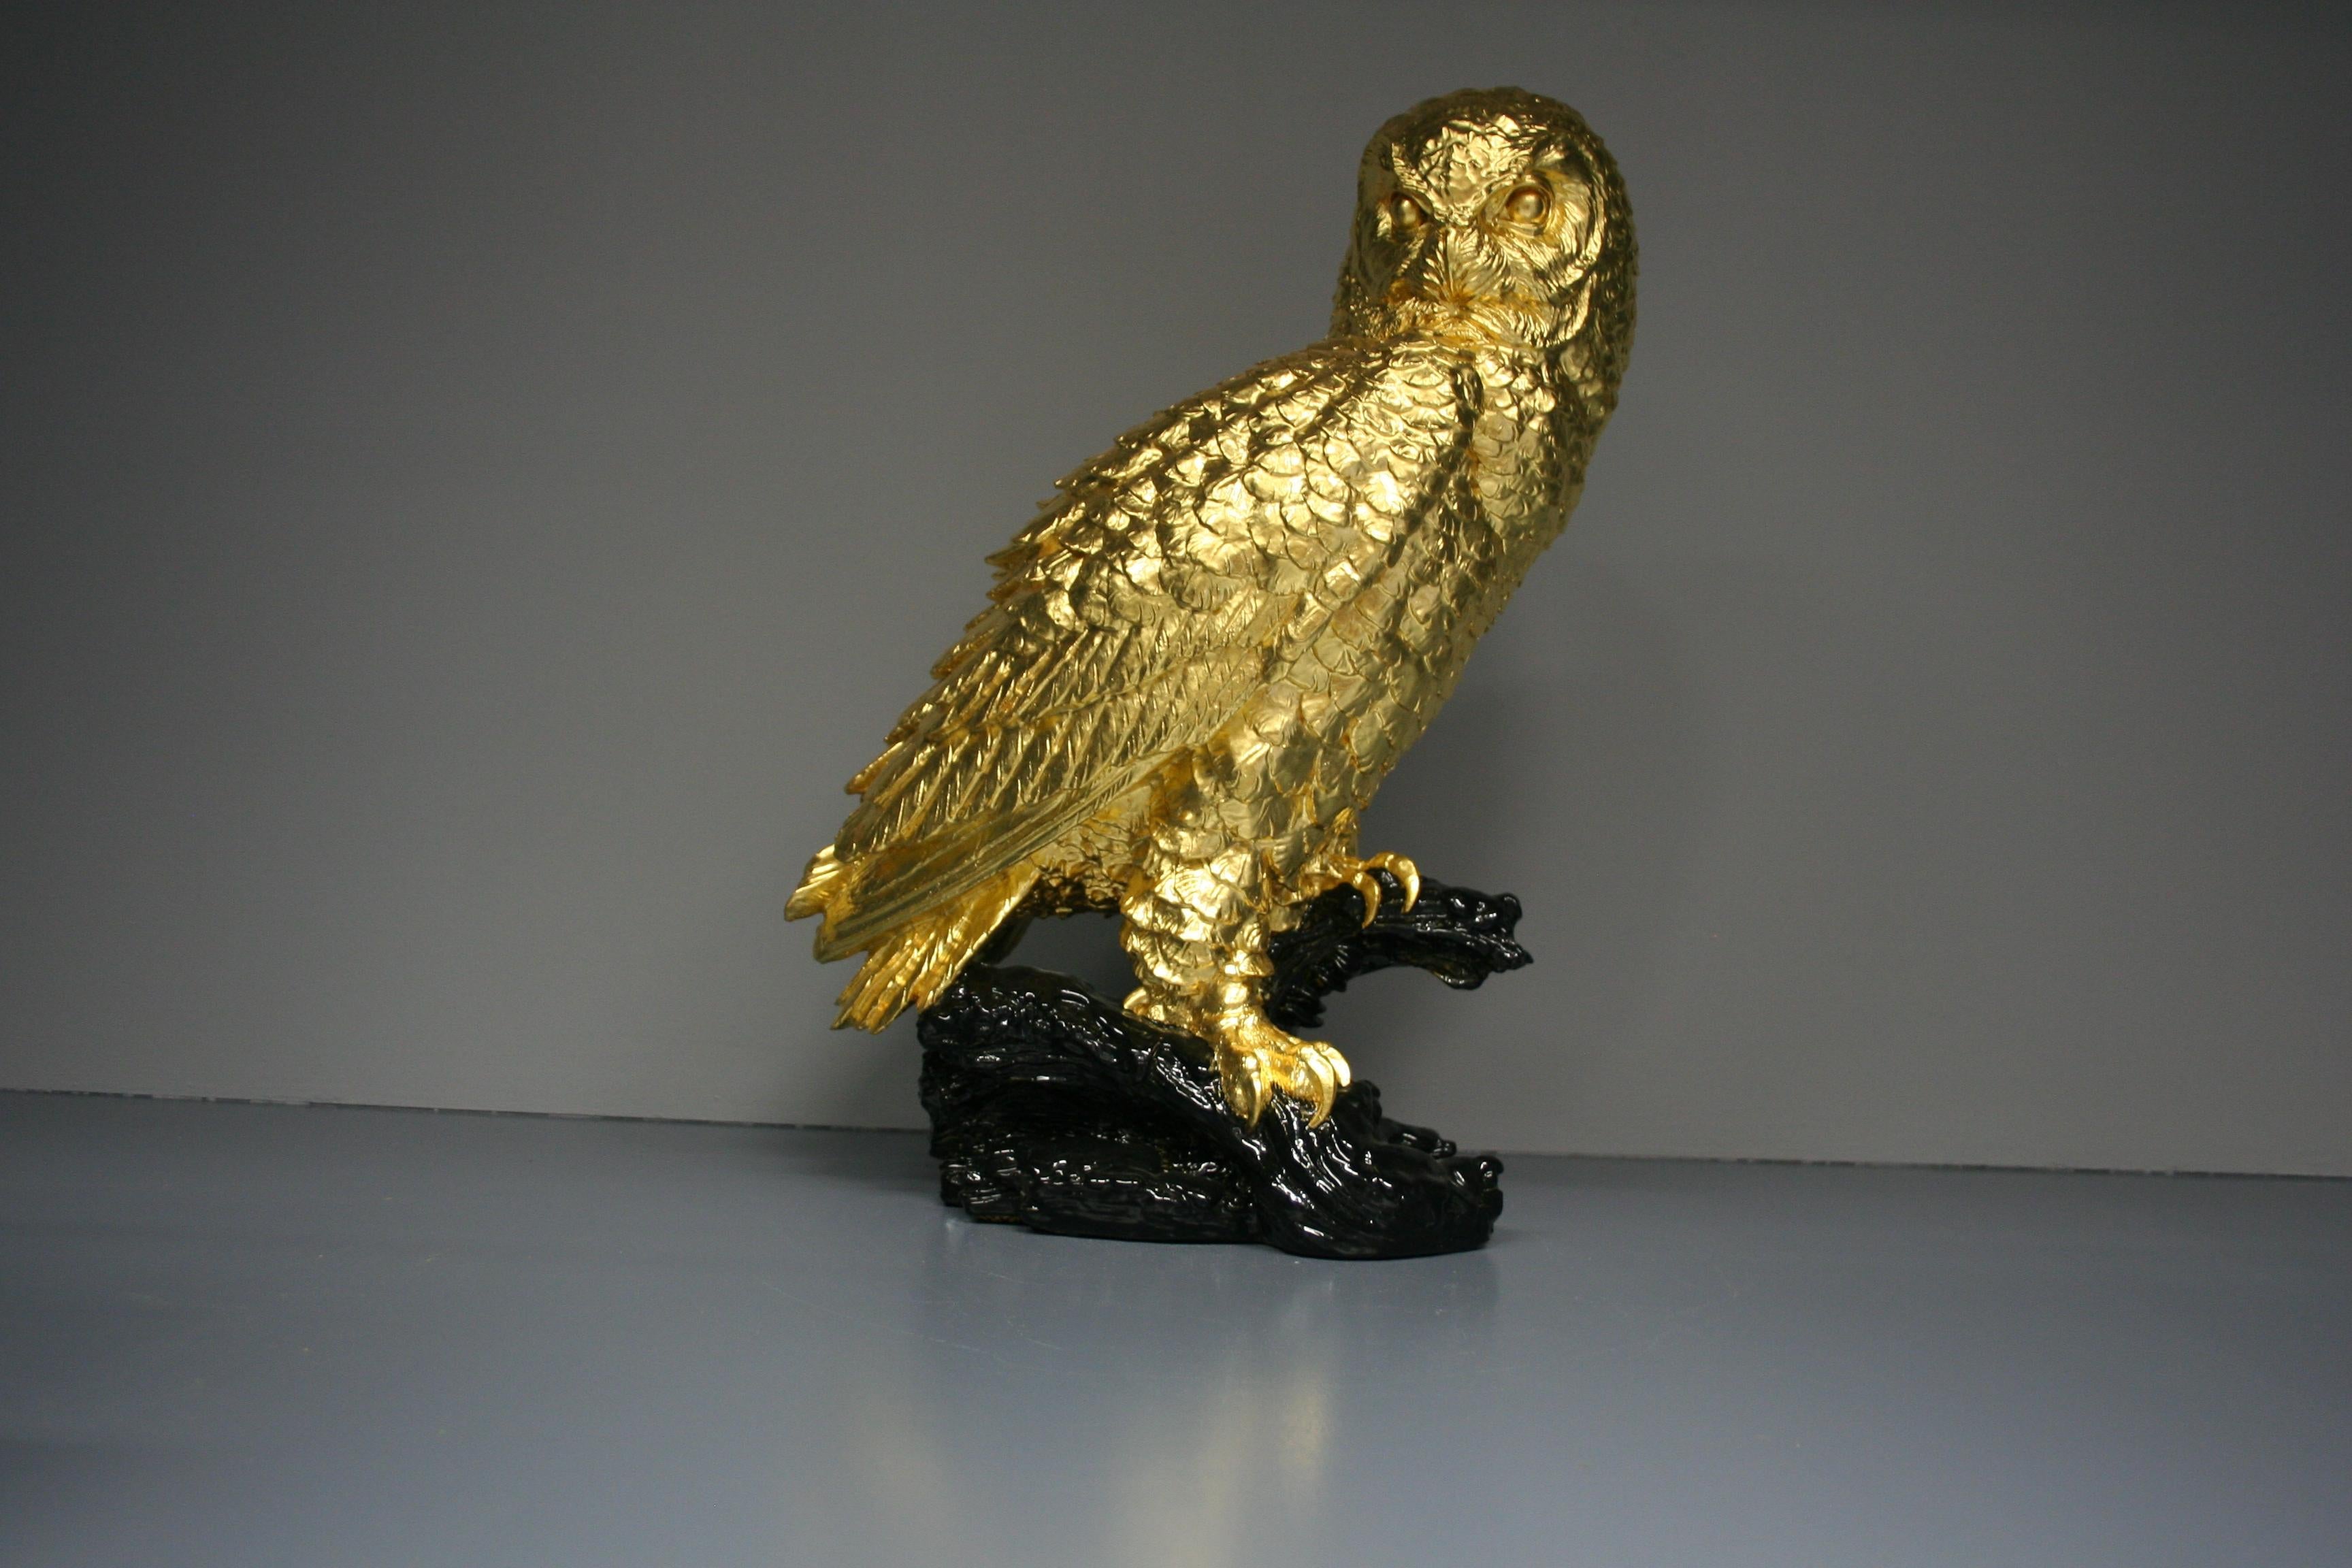 Steven Figurative Sculpture - Golden owl 24 Karat gilded